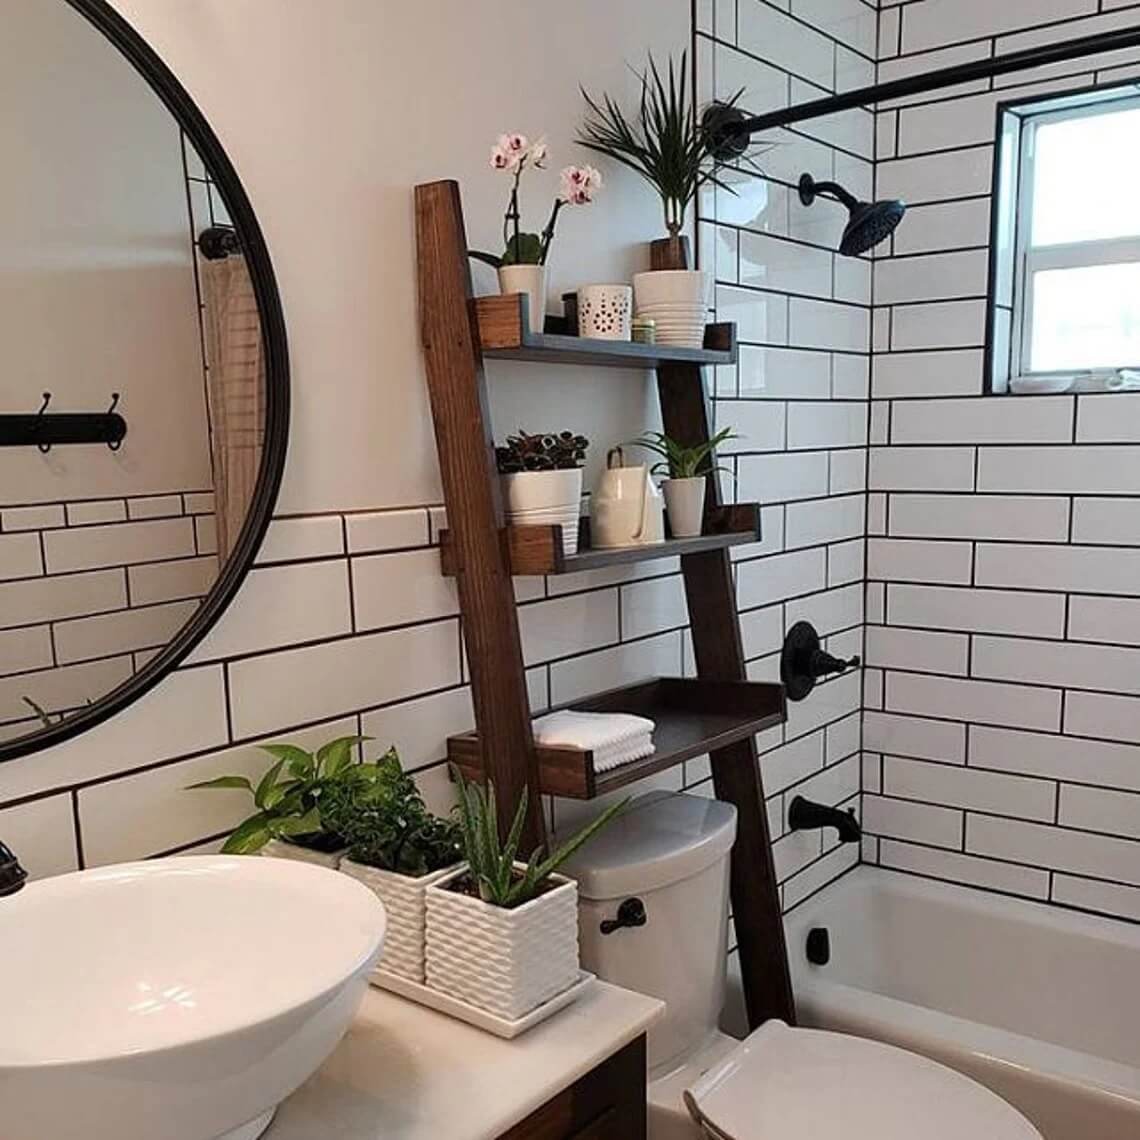 etsy shelves above the toilet tiny bathroom design nordroom 60 Small Bathroom Ideas & Make It Look Bigger